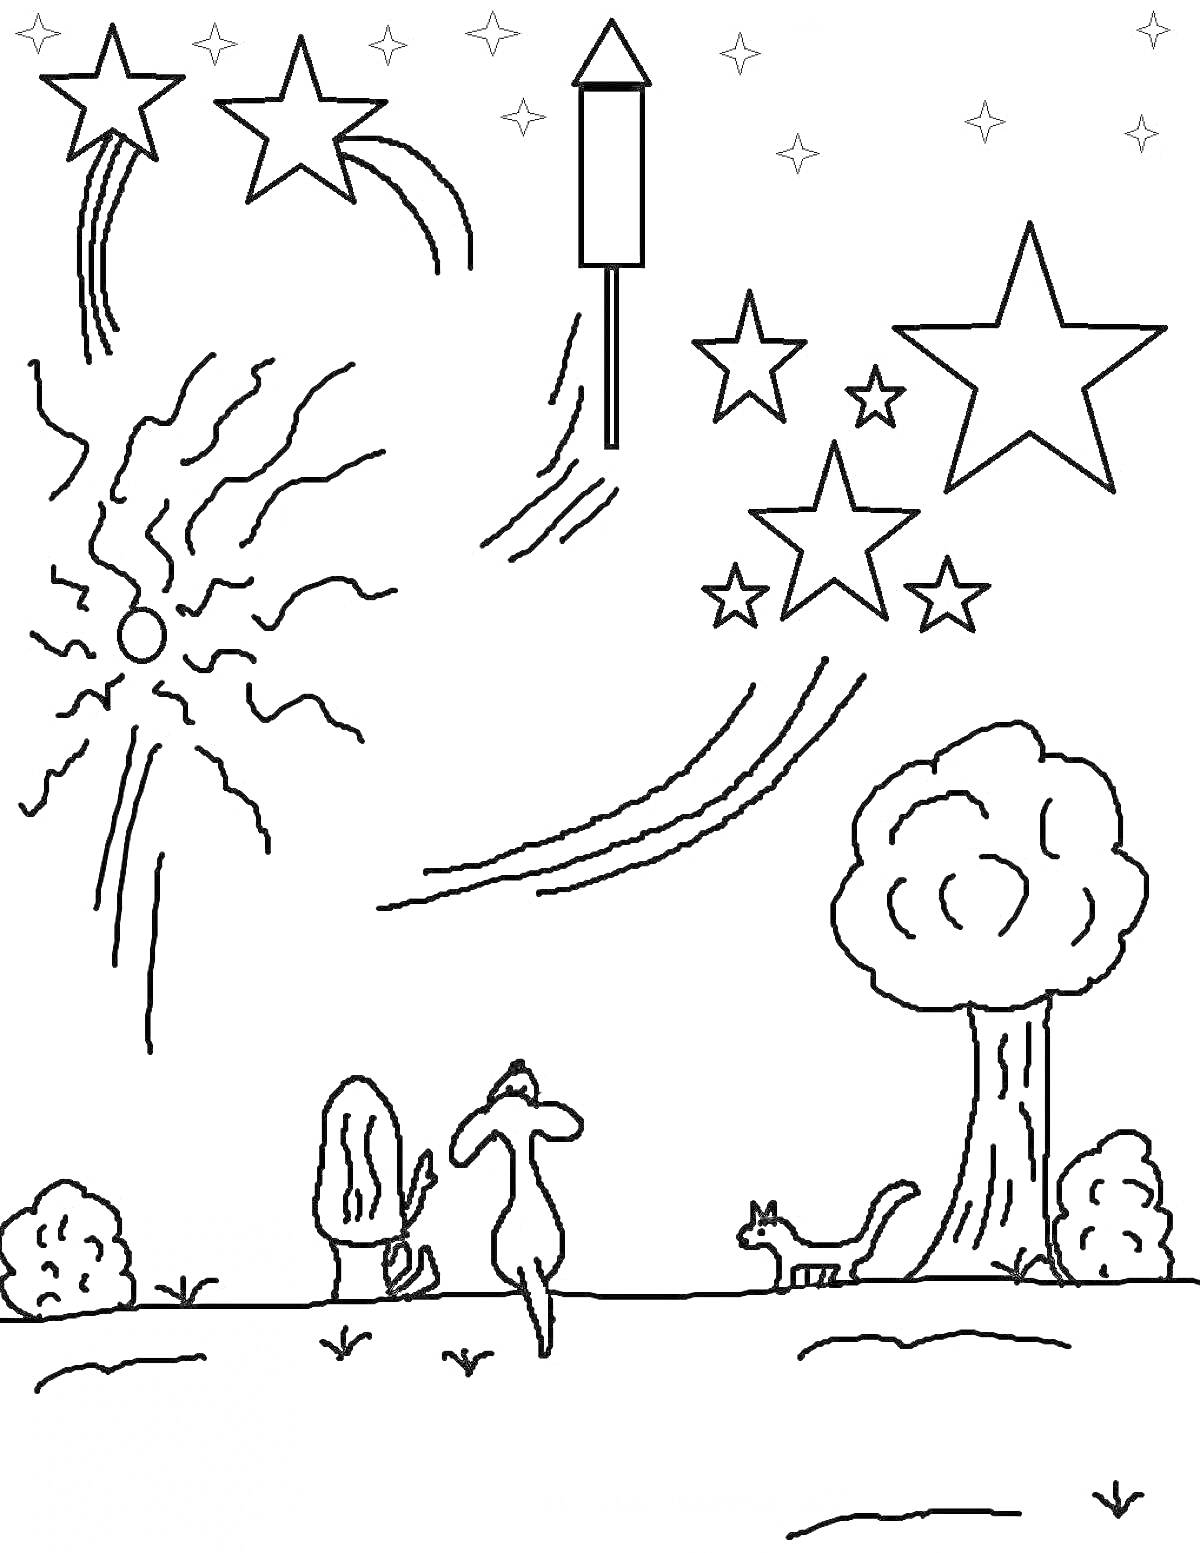 На раскраске изображено: Салют, Победа, Звезды, Ракета, Кусты, Кот, Заяц, Трава, Ночь, Небо